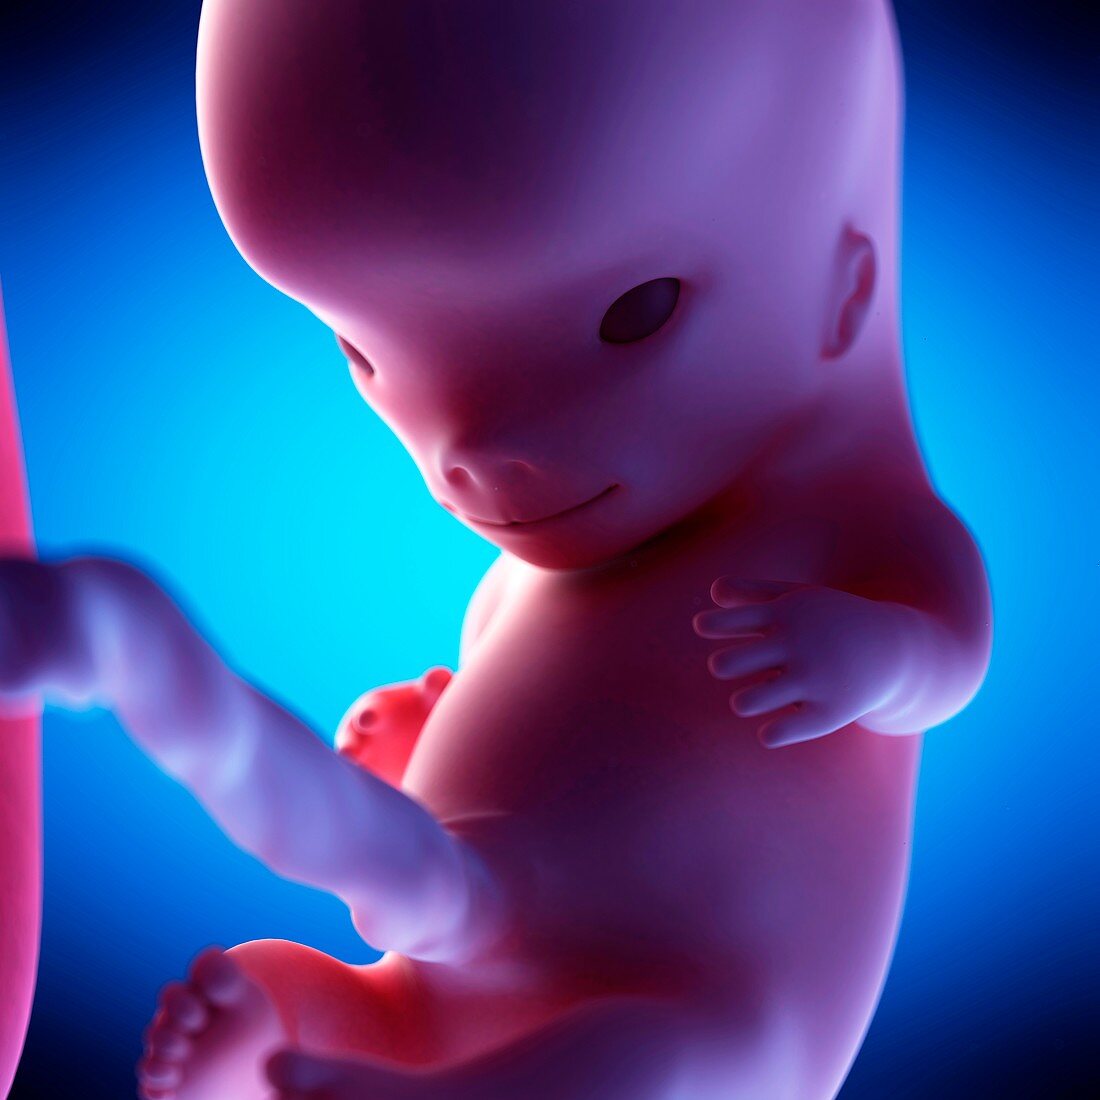 Human fetus at week 10 of gestation, illustration